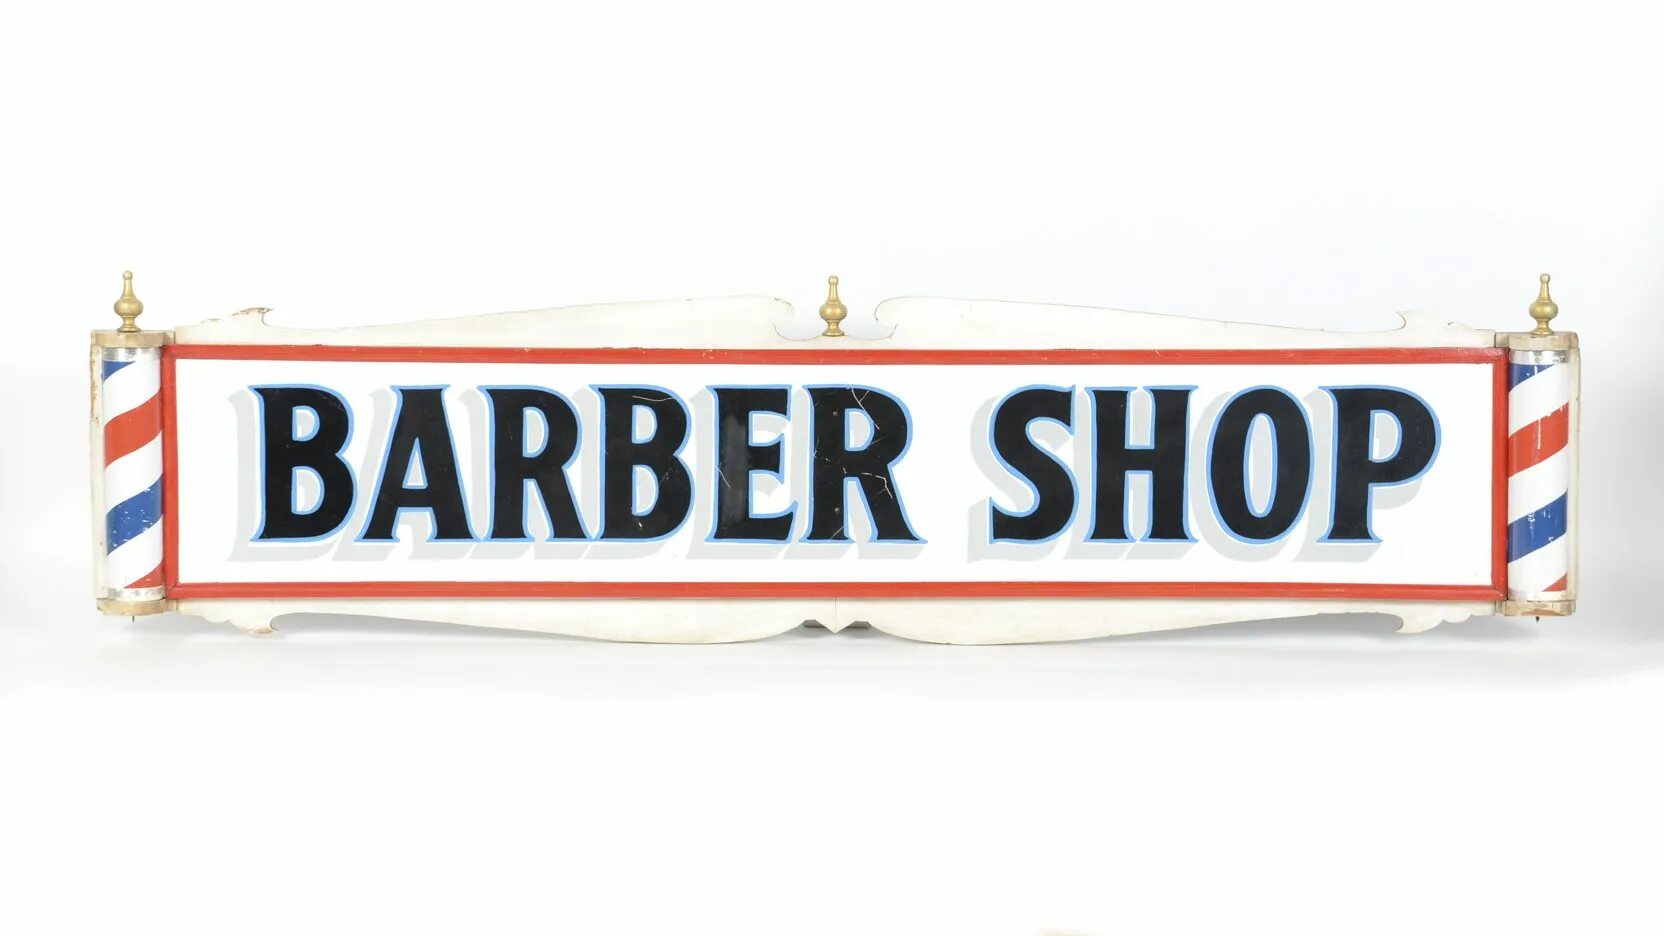 Shop sang. Барбер логотип. Barbershop надпись. Barbershop вектор. Барбершоп рисунок.